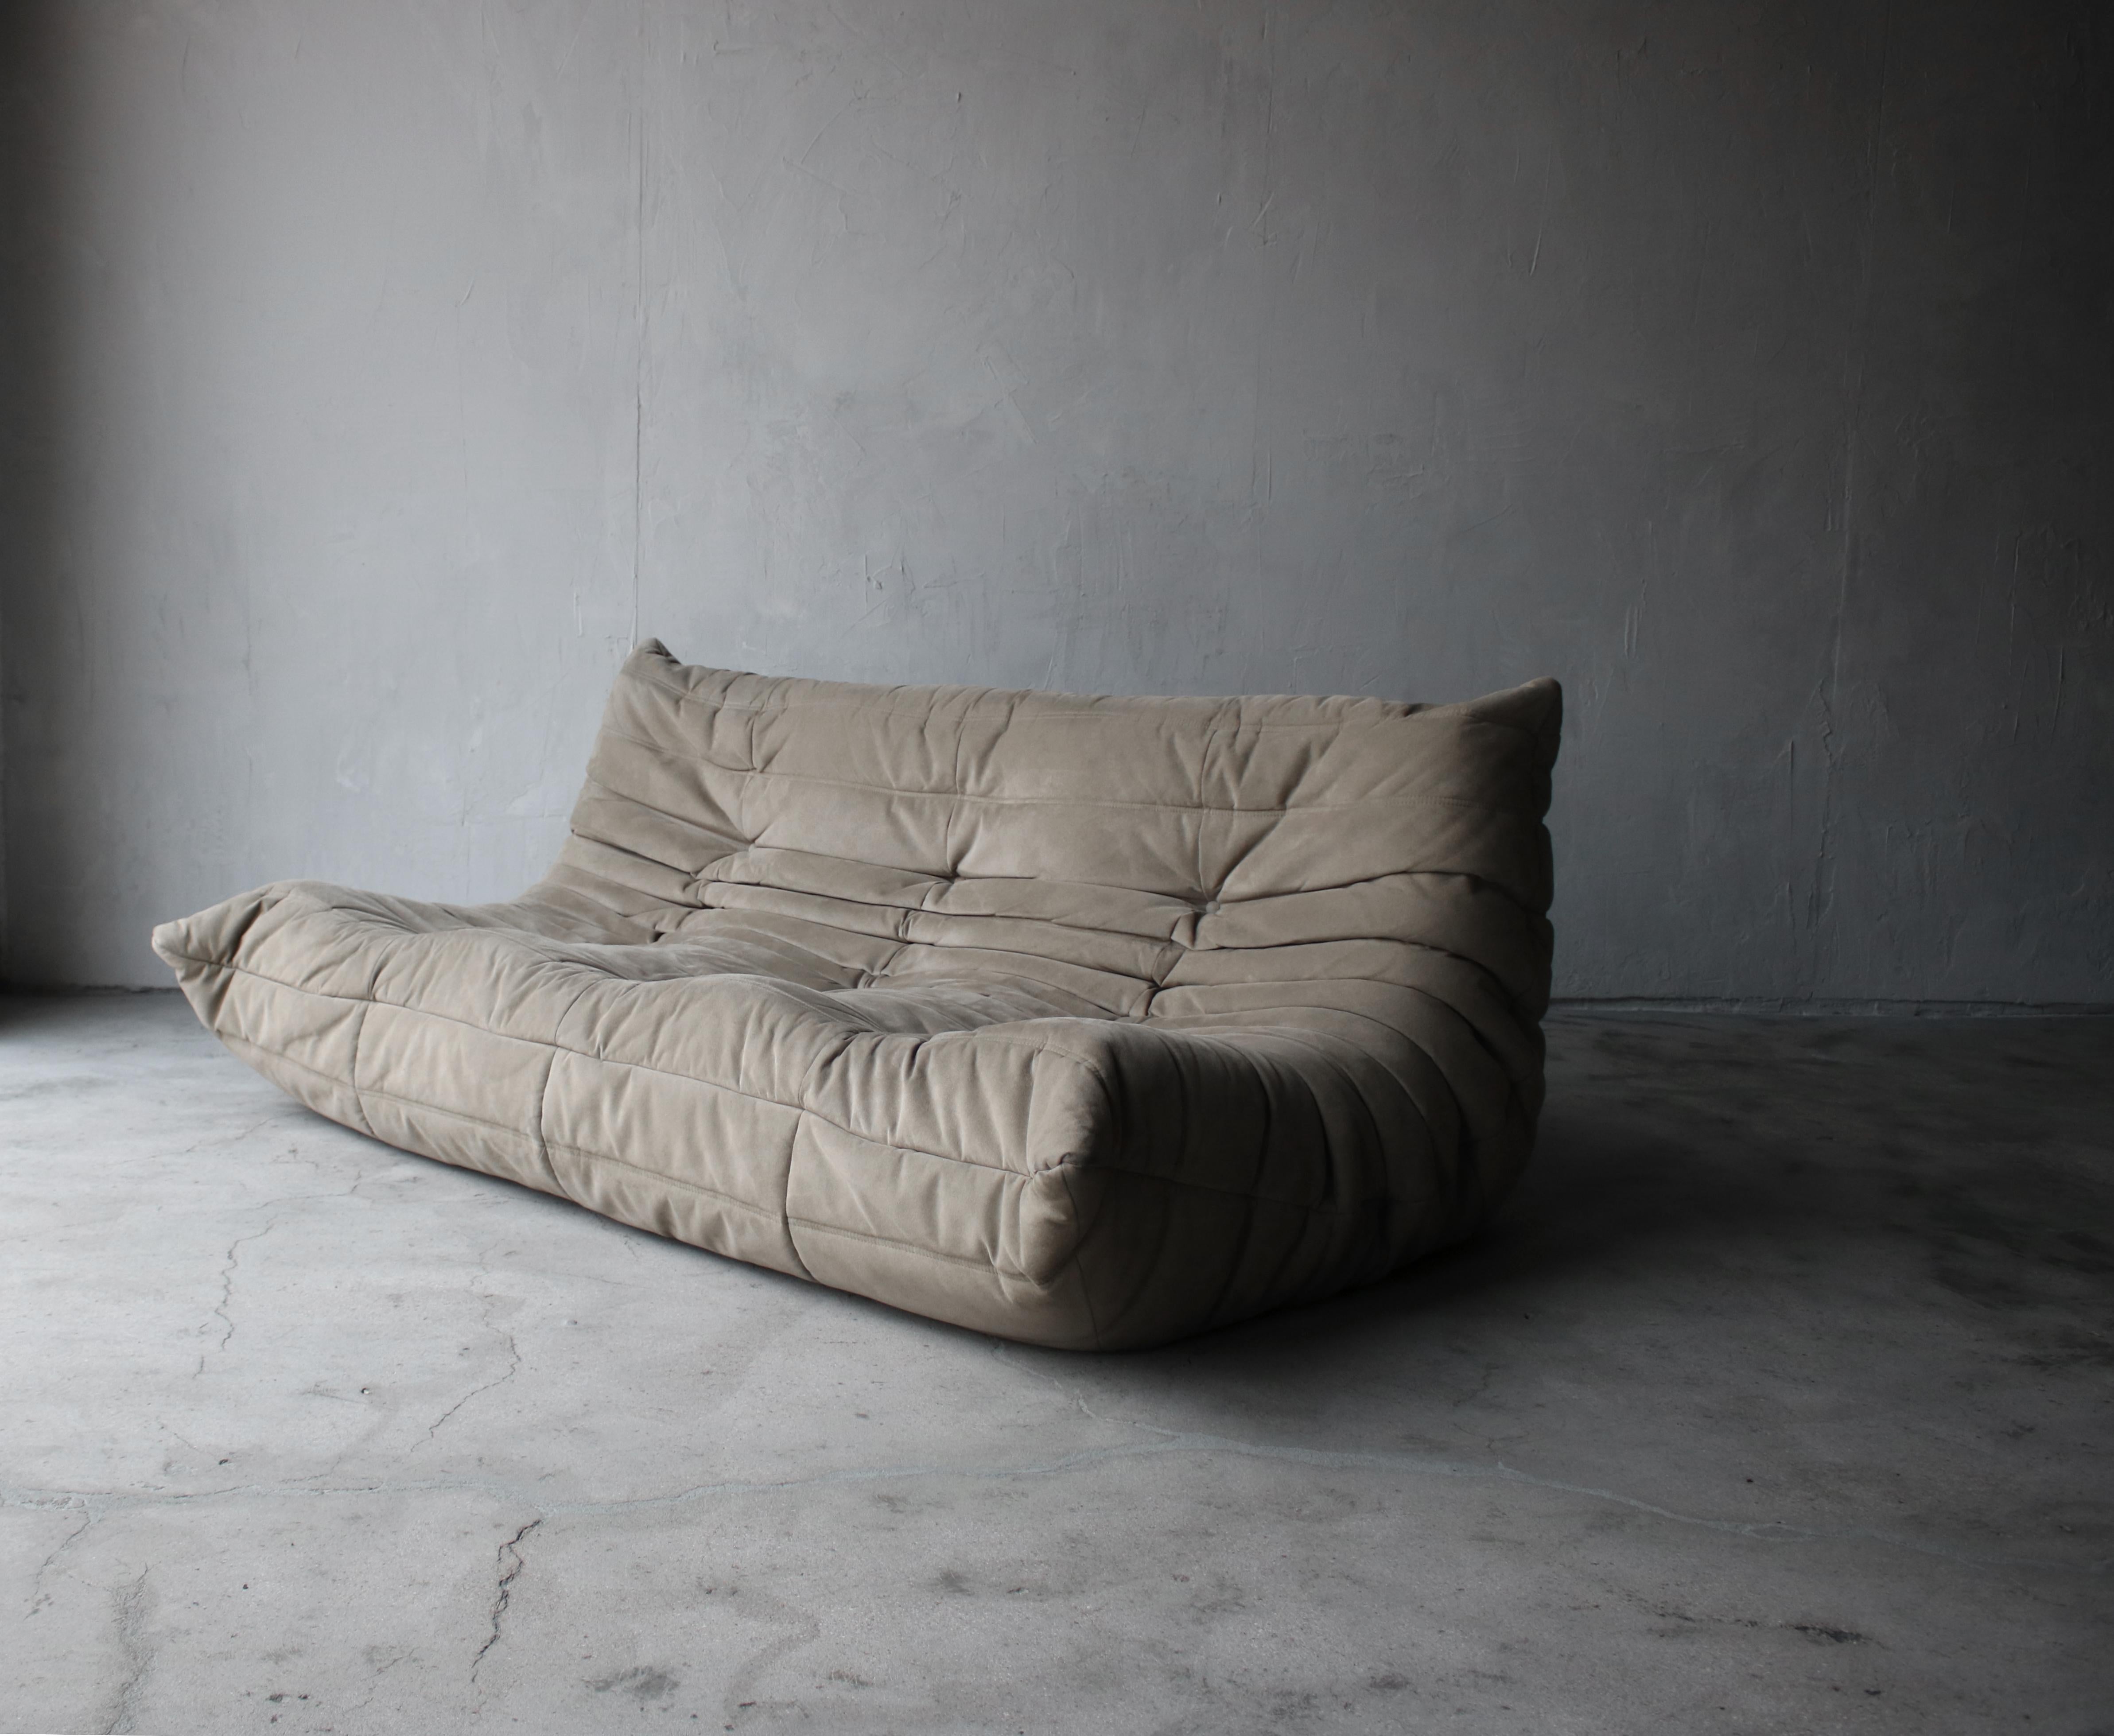 Mid-Century Modern 3-Piece Togo Sofa Sectional by Ligne Roset